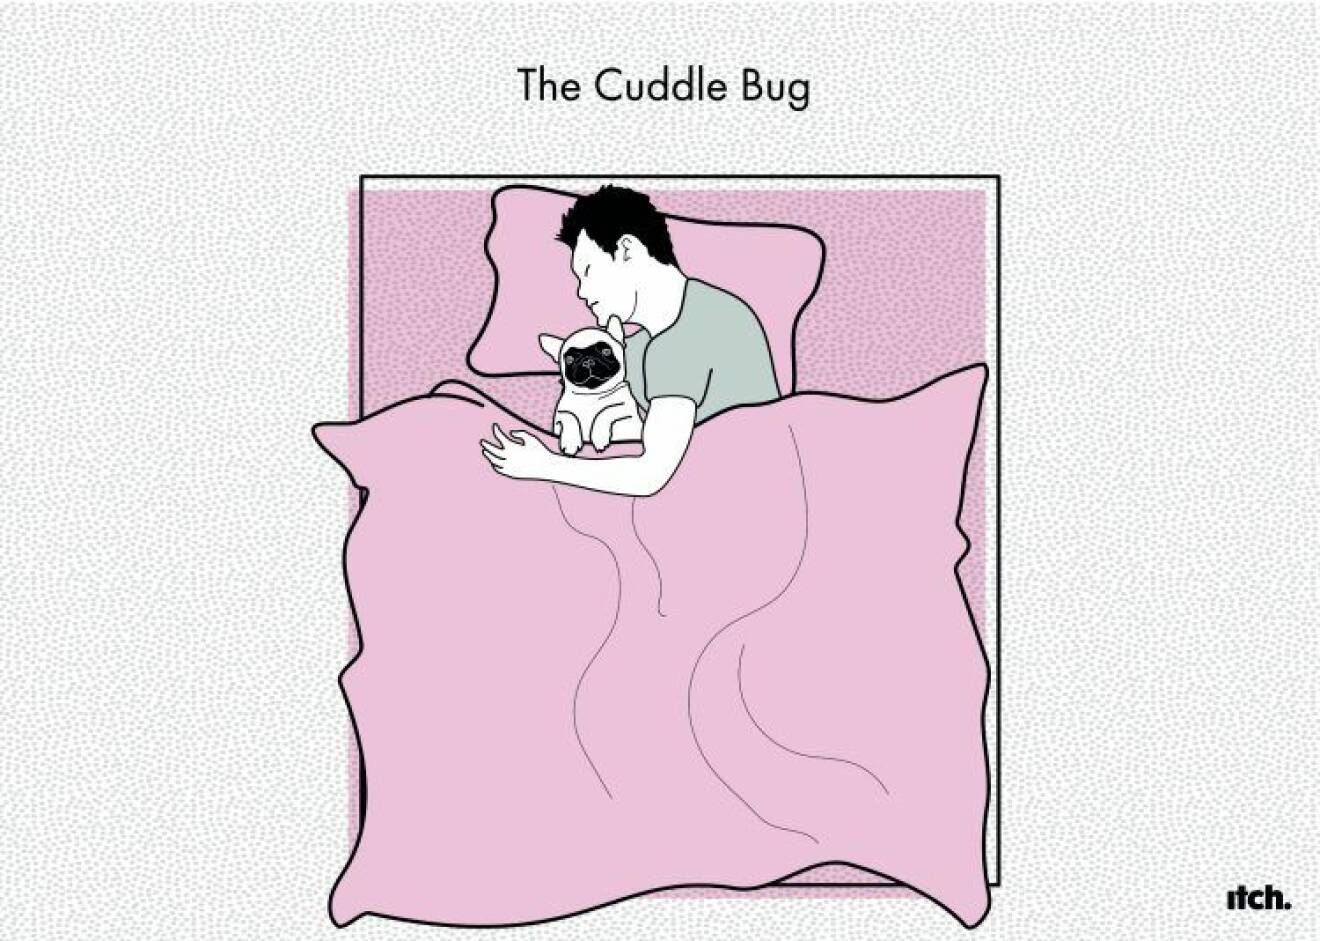 The cuddle bug